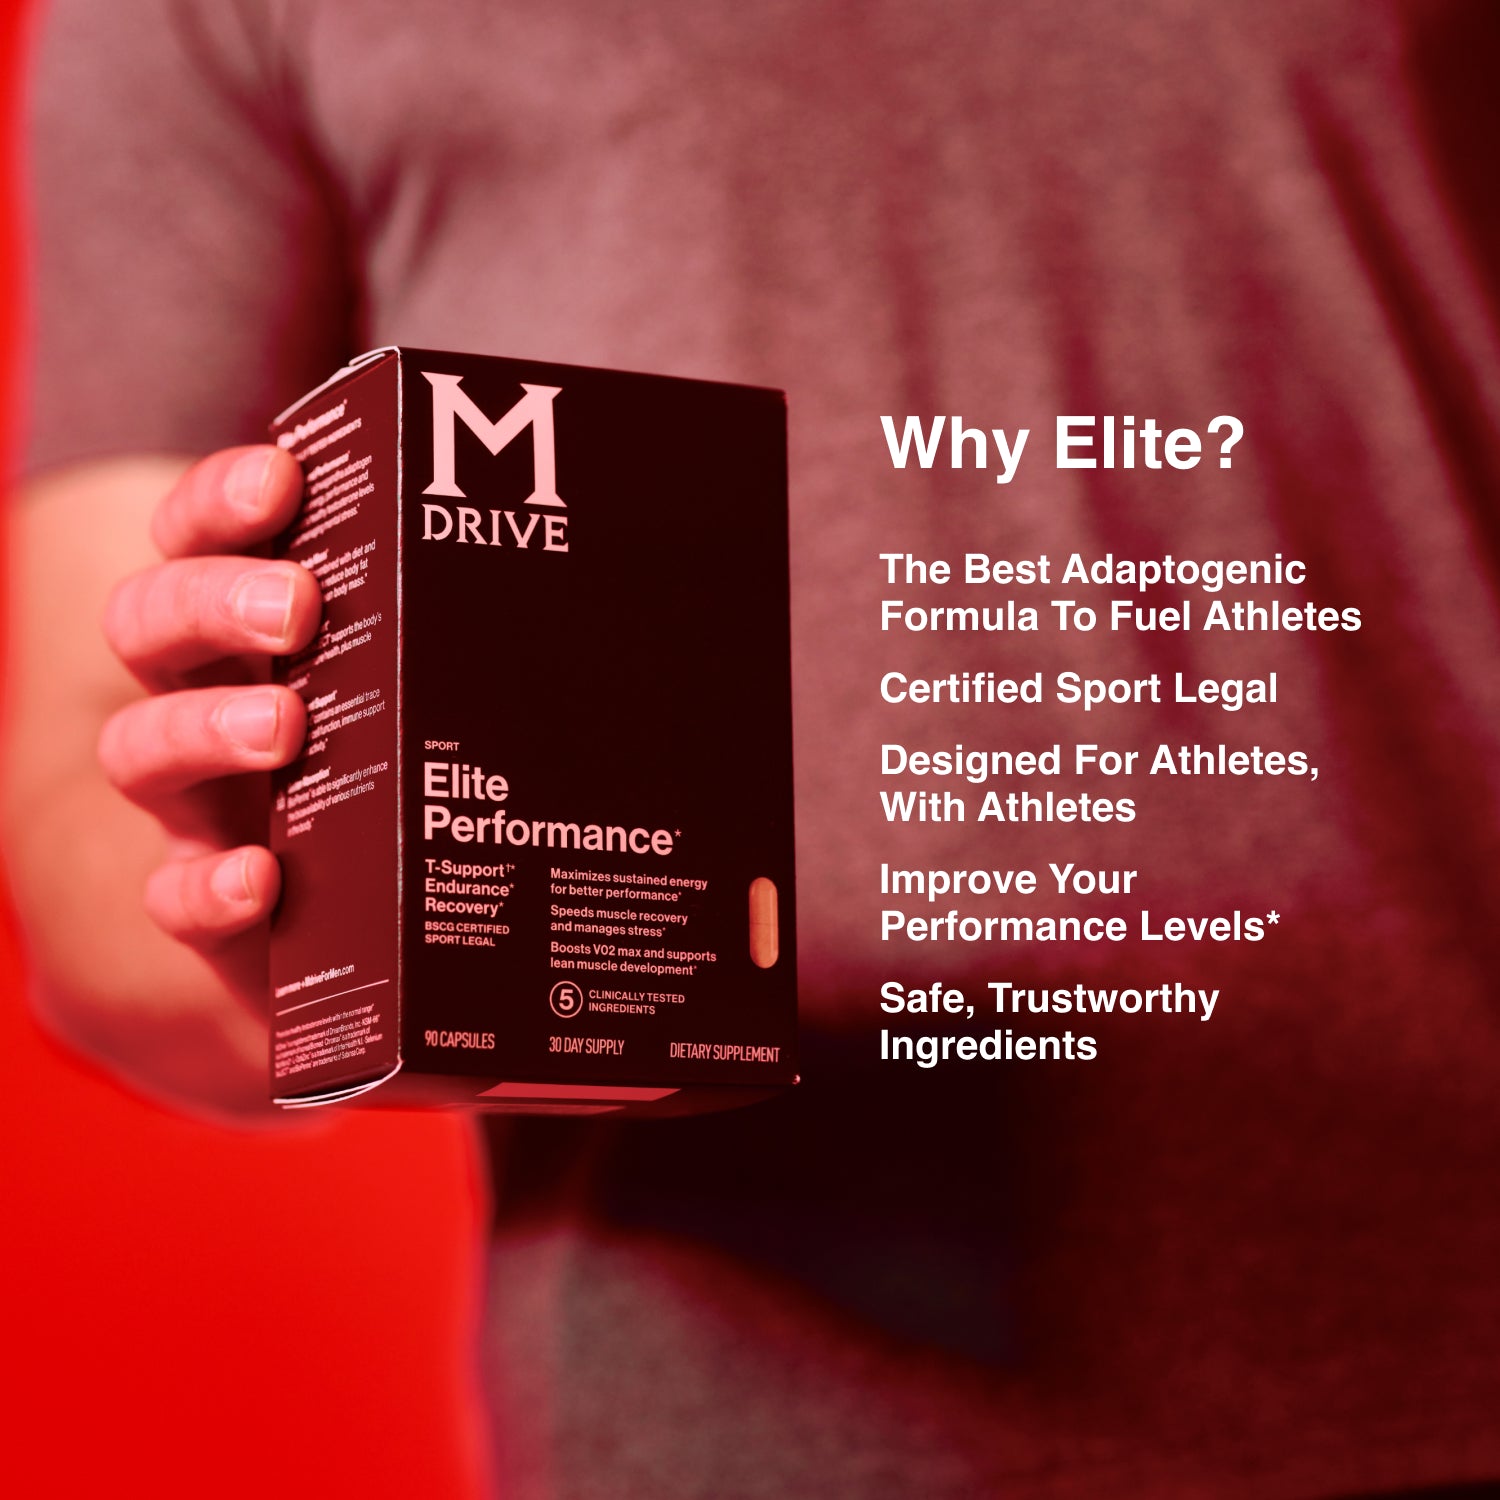 Why M Drive Elite?